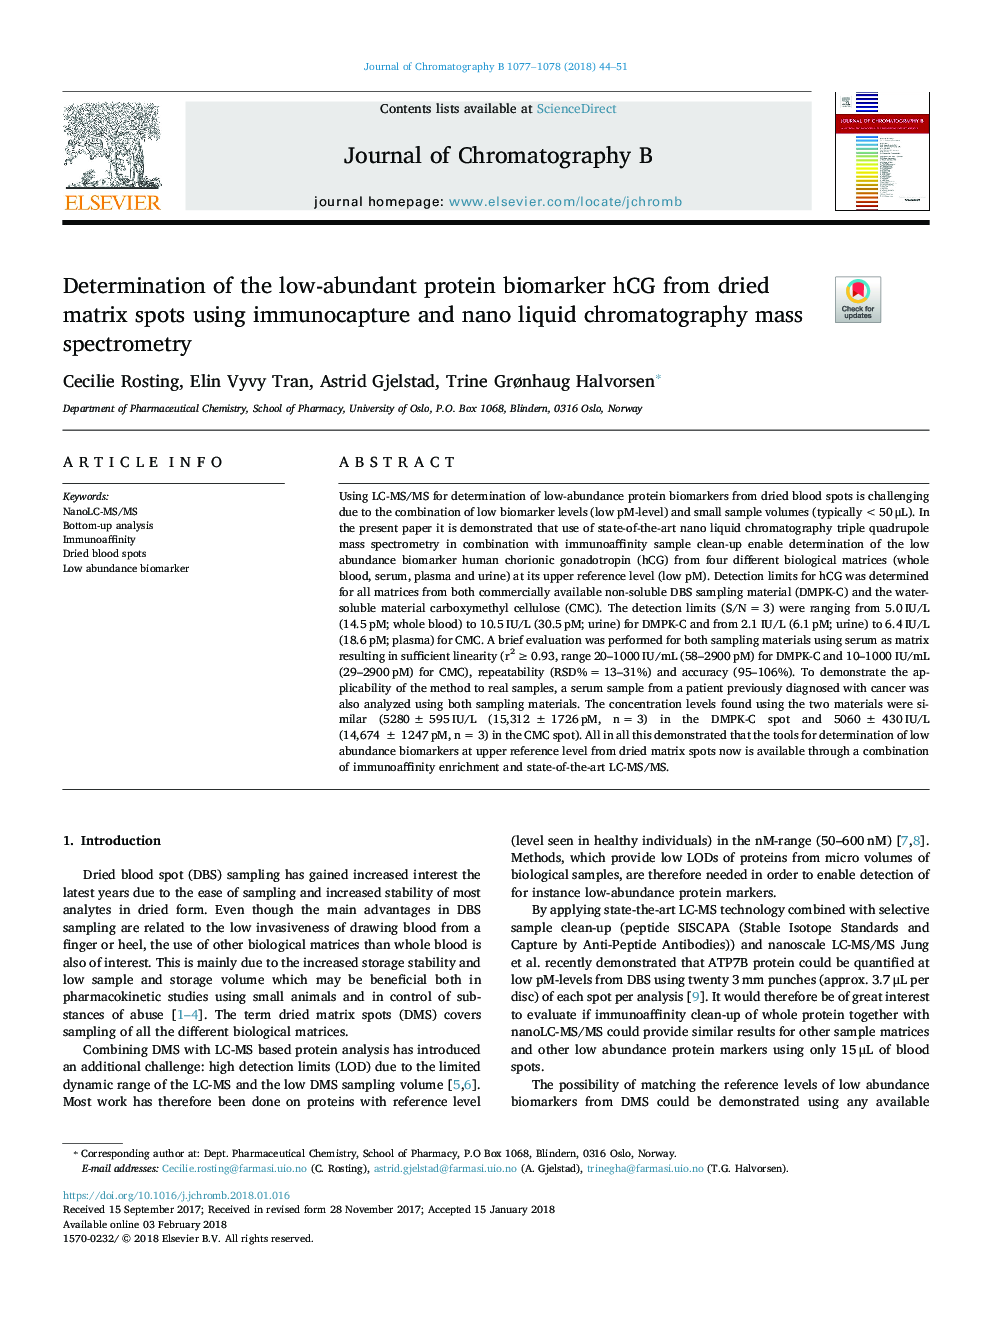 Determination of the low-abundant protein biomarker hCG from dried matrix spots using immunocapture and nano liquid chromatography mass spectrometry